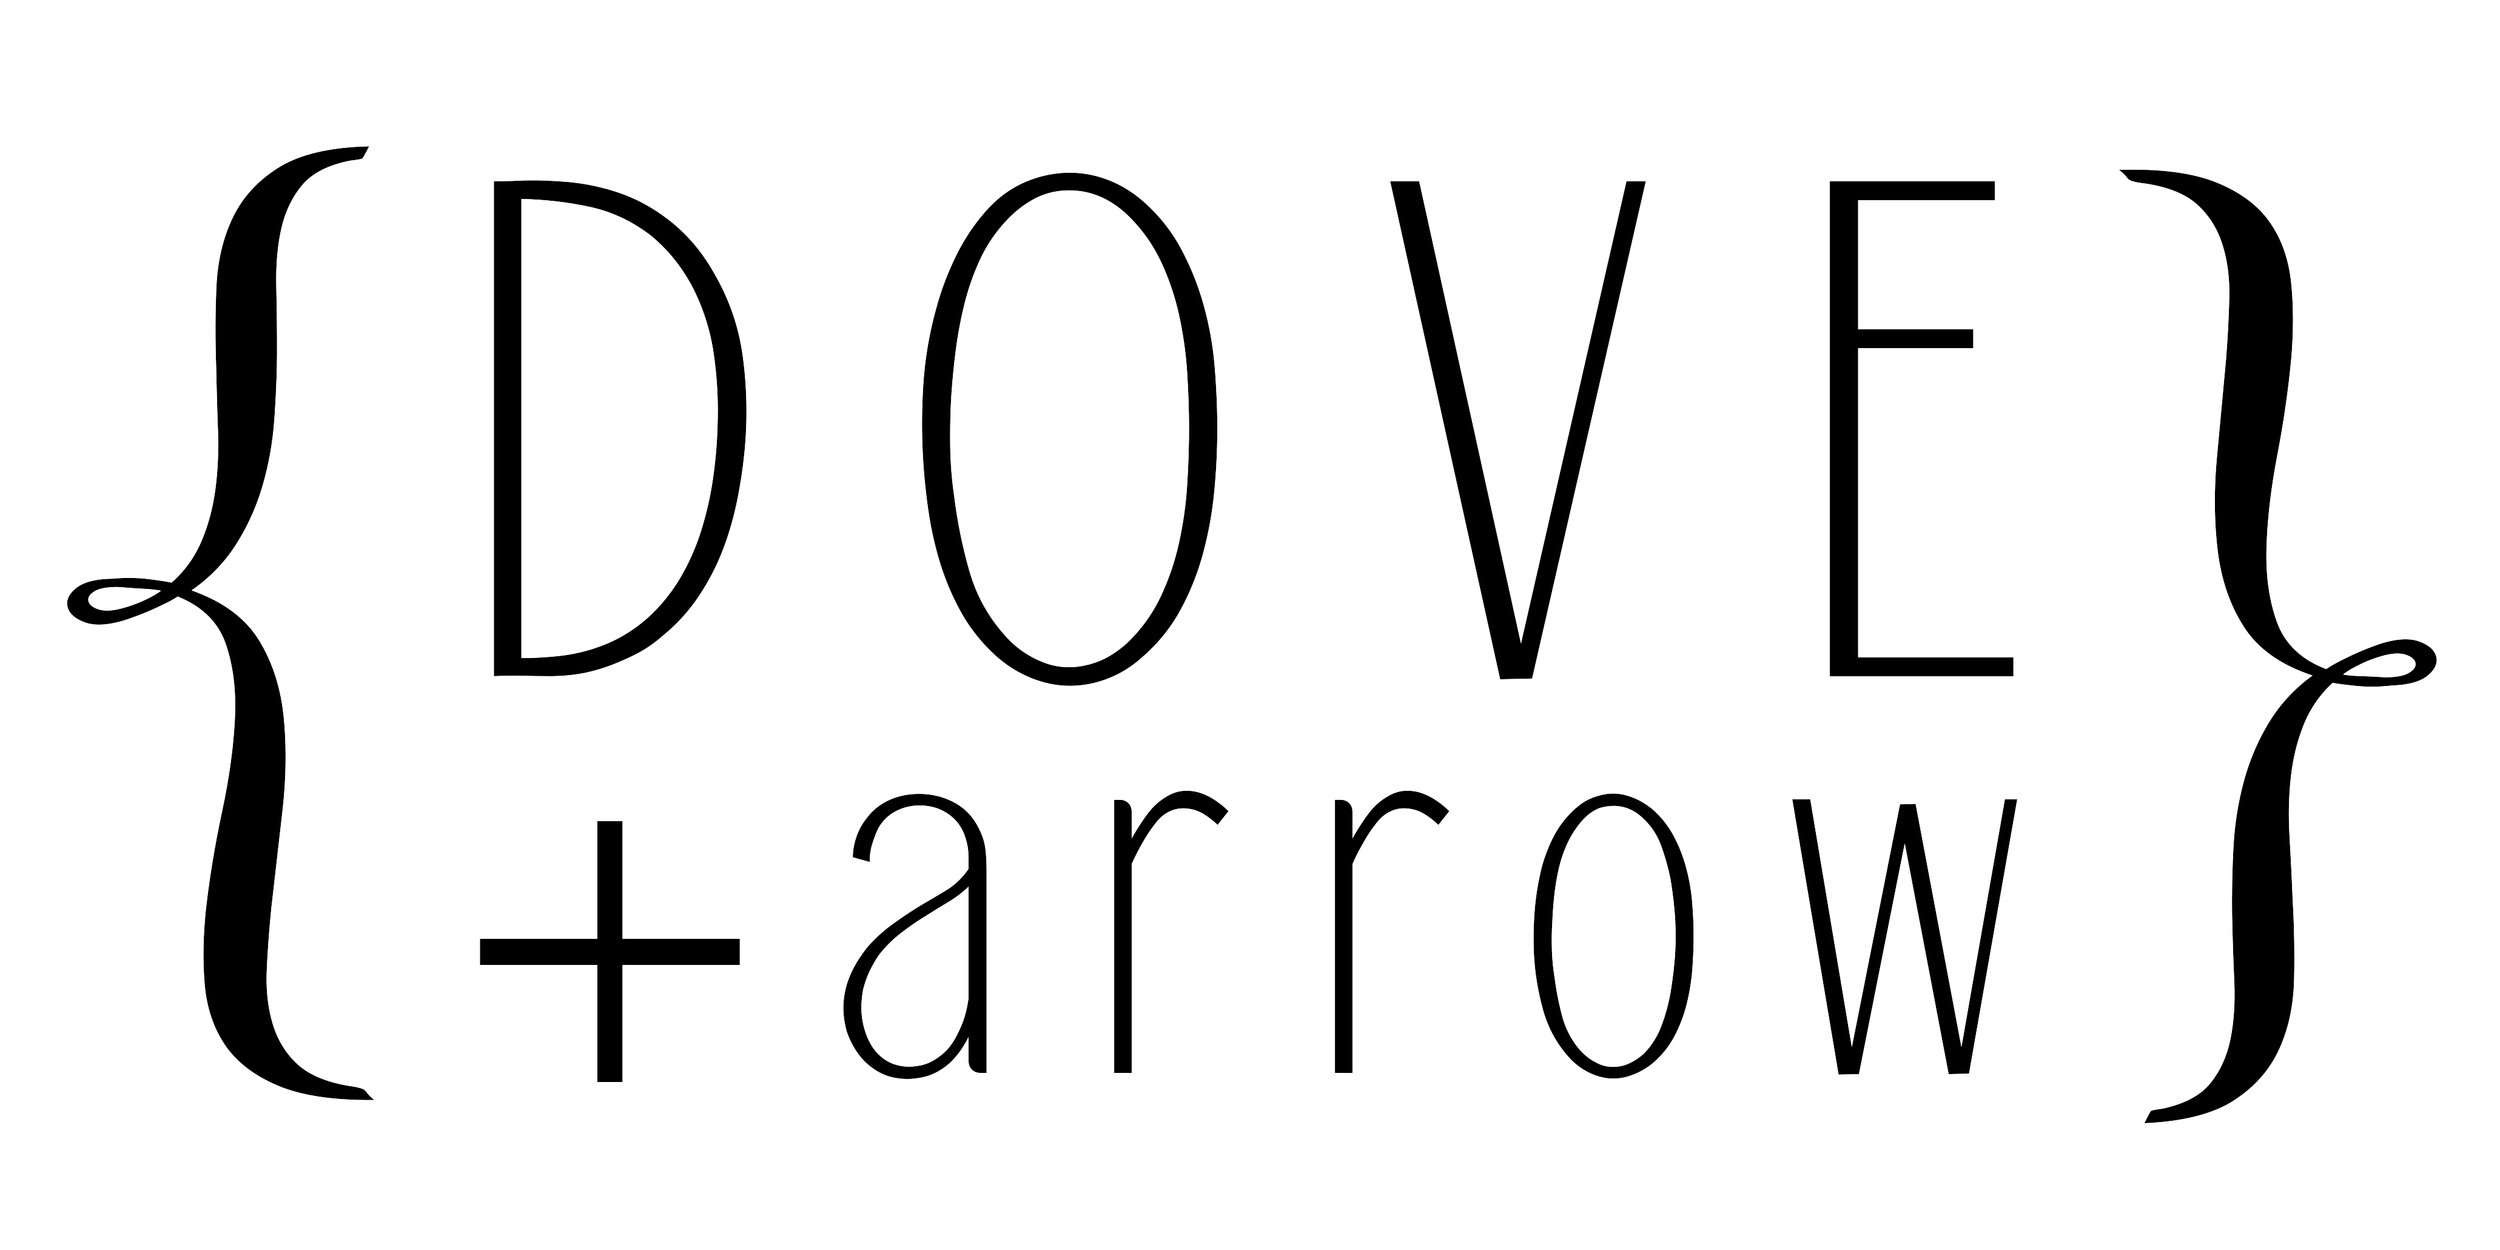 ART IN MY GARDEN - Dove and Arrow Logo - low quality screen grab.jpg